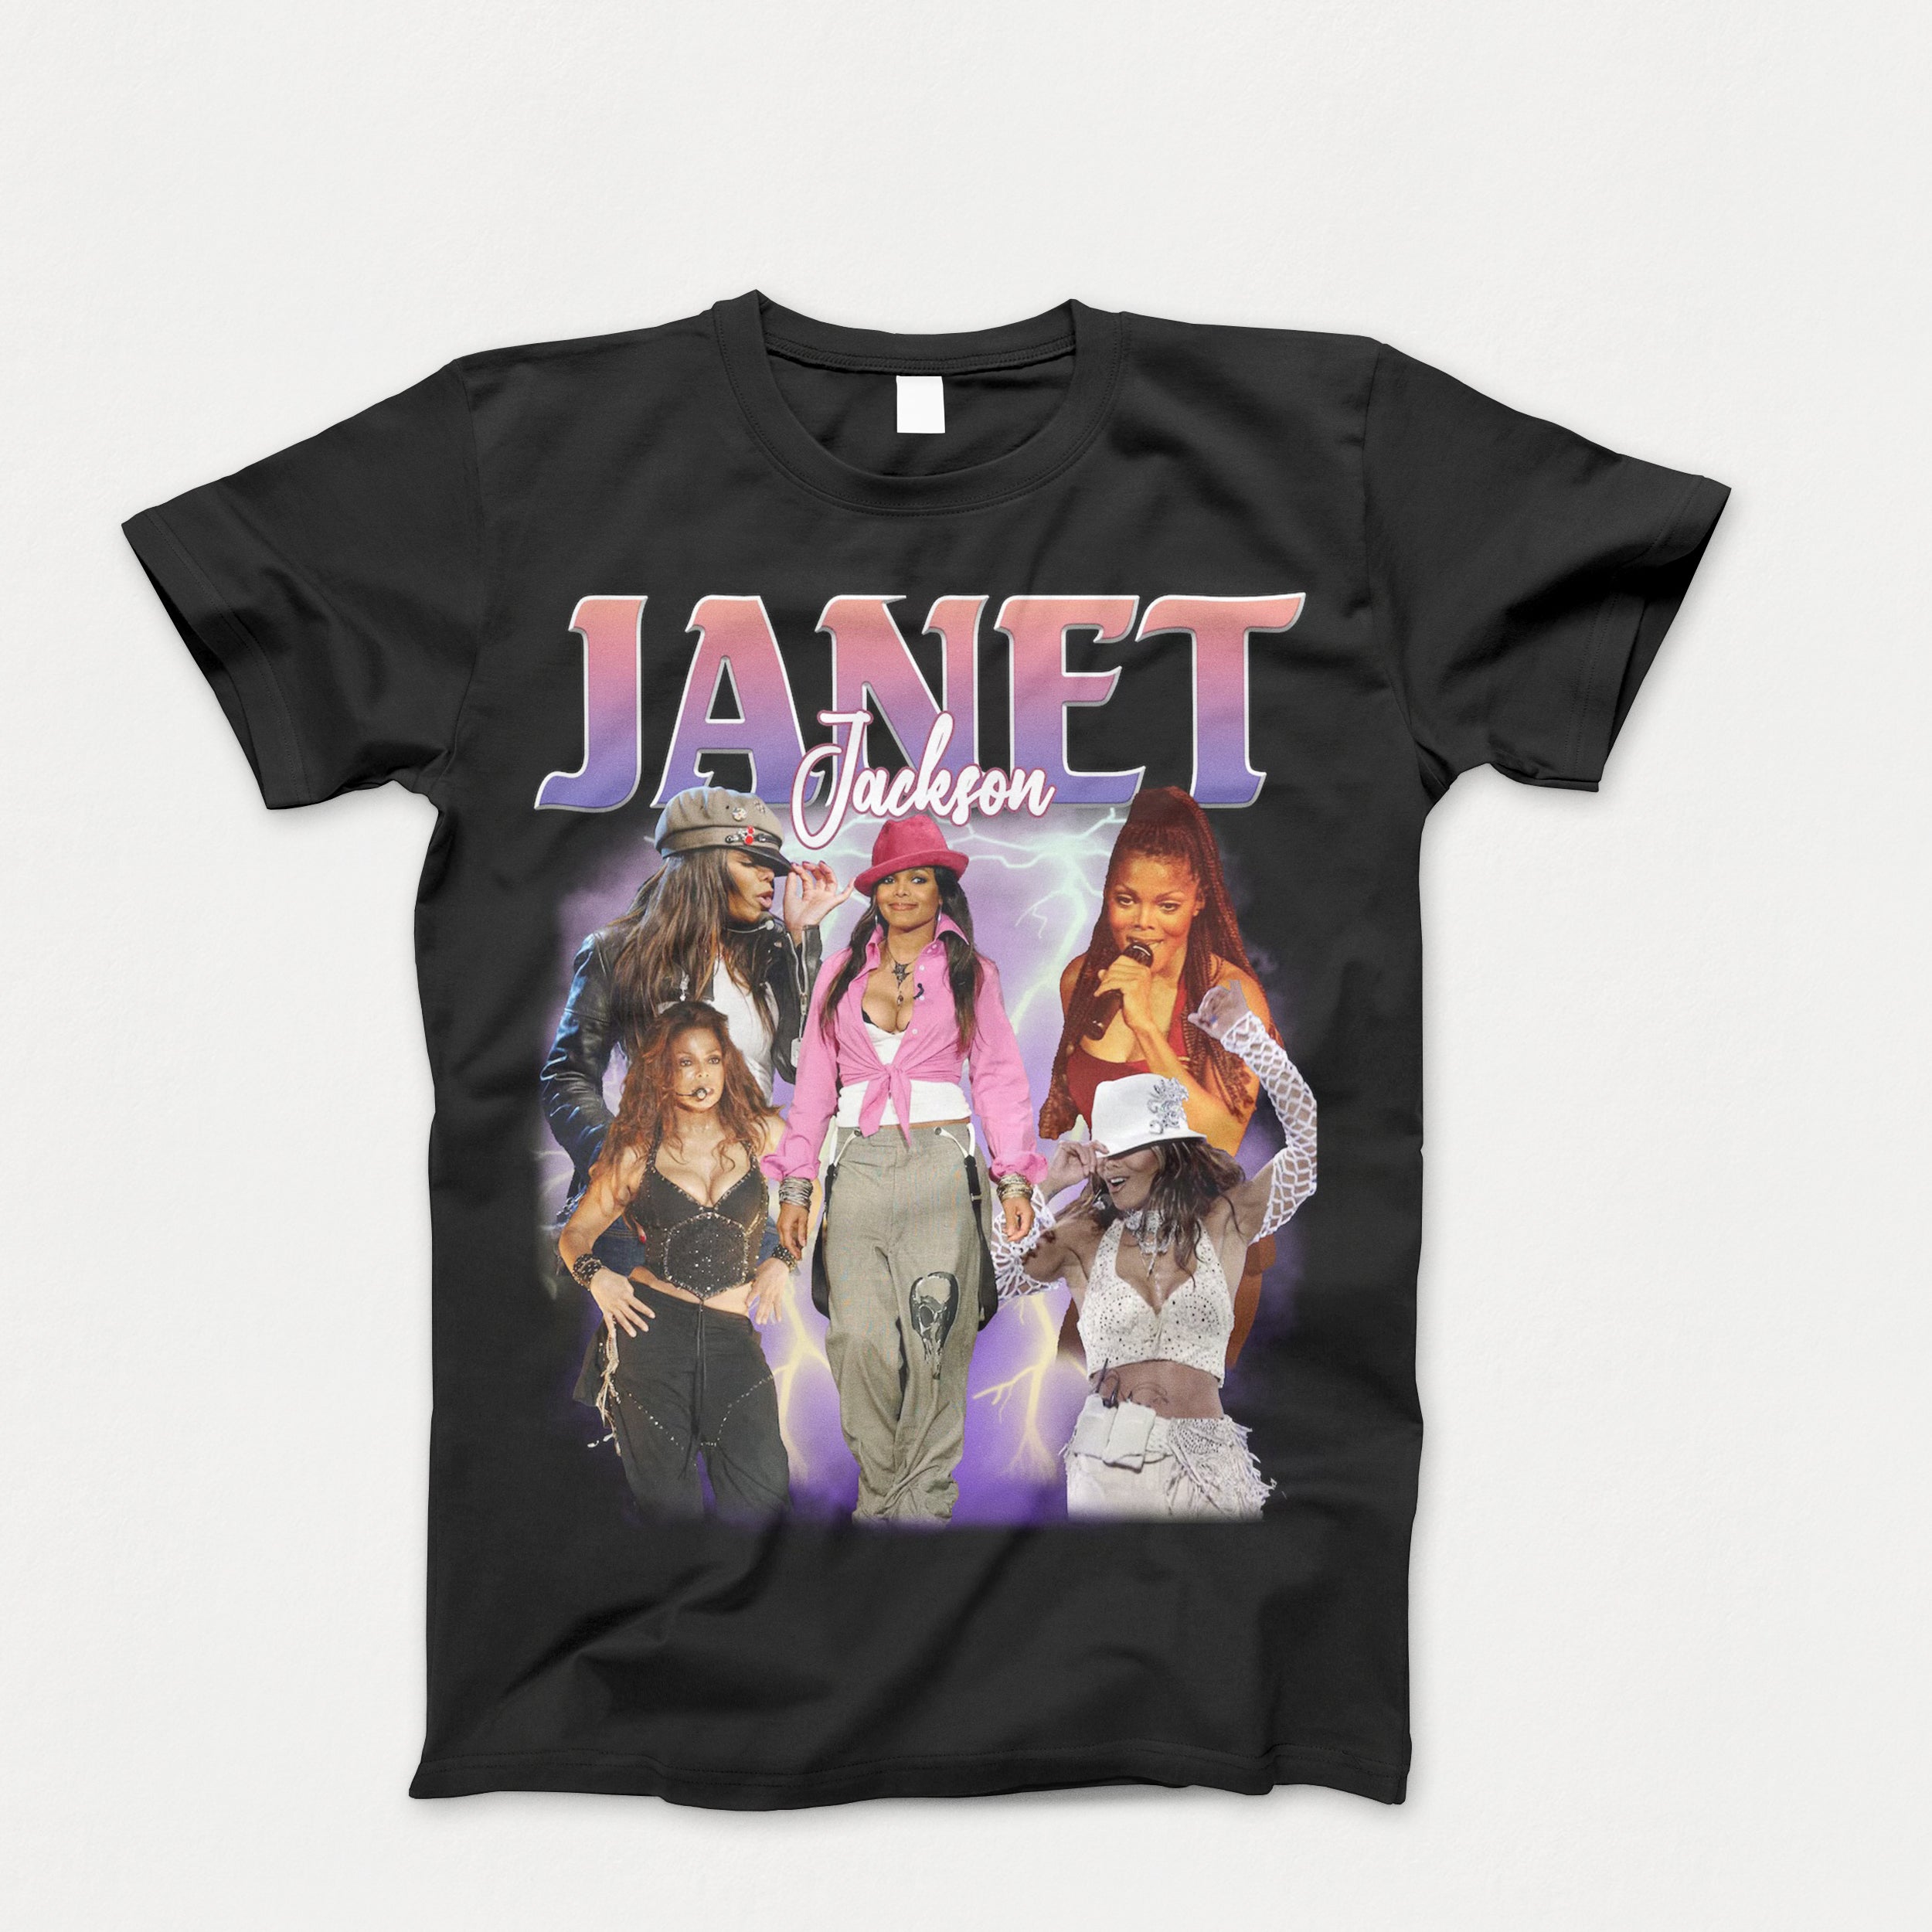 Unisex Adult Janet Jackson Tee Shirt